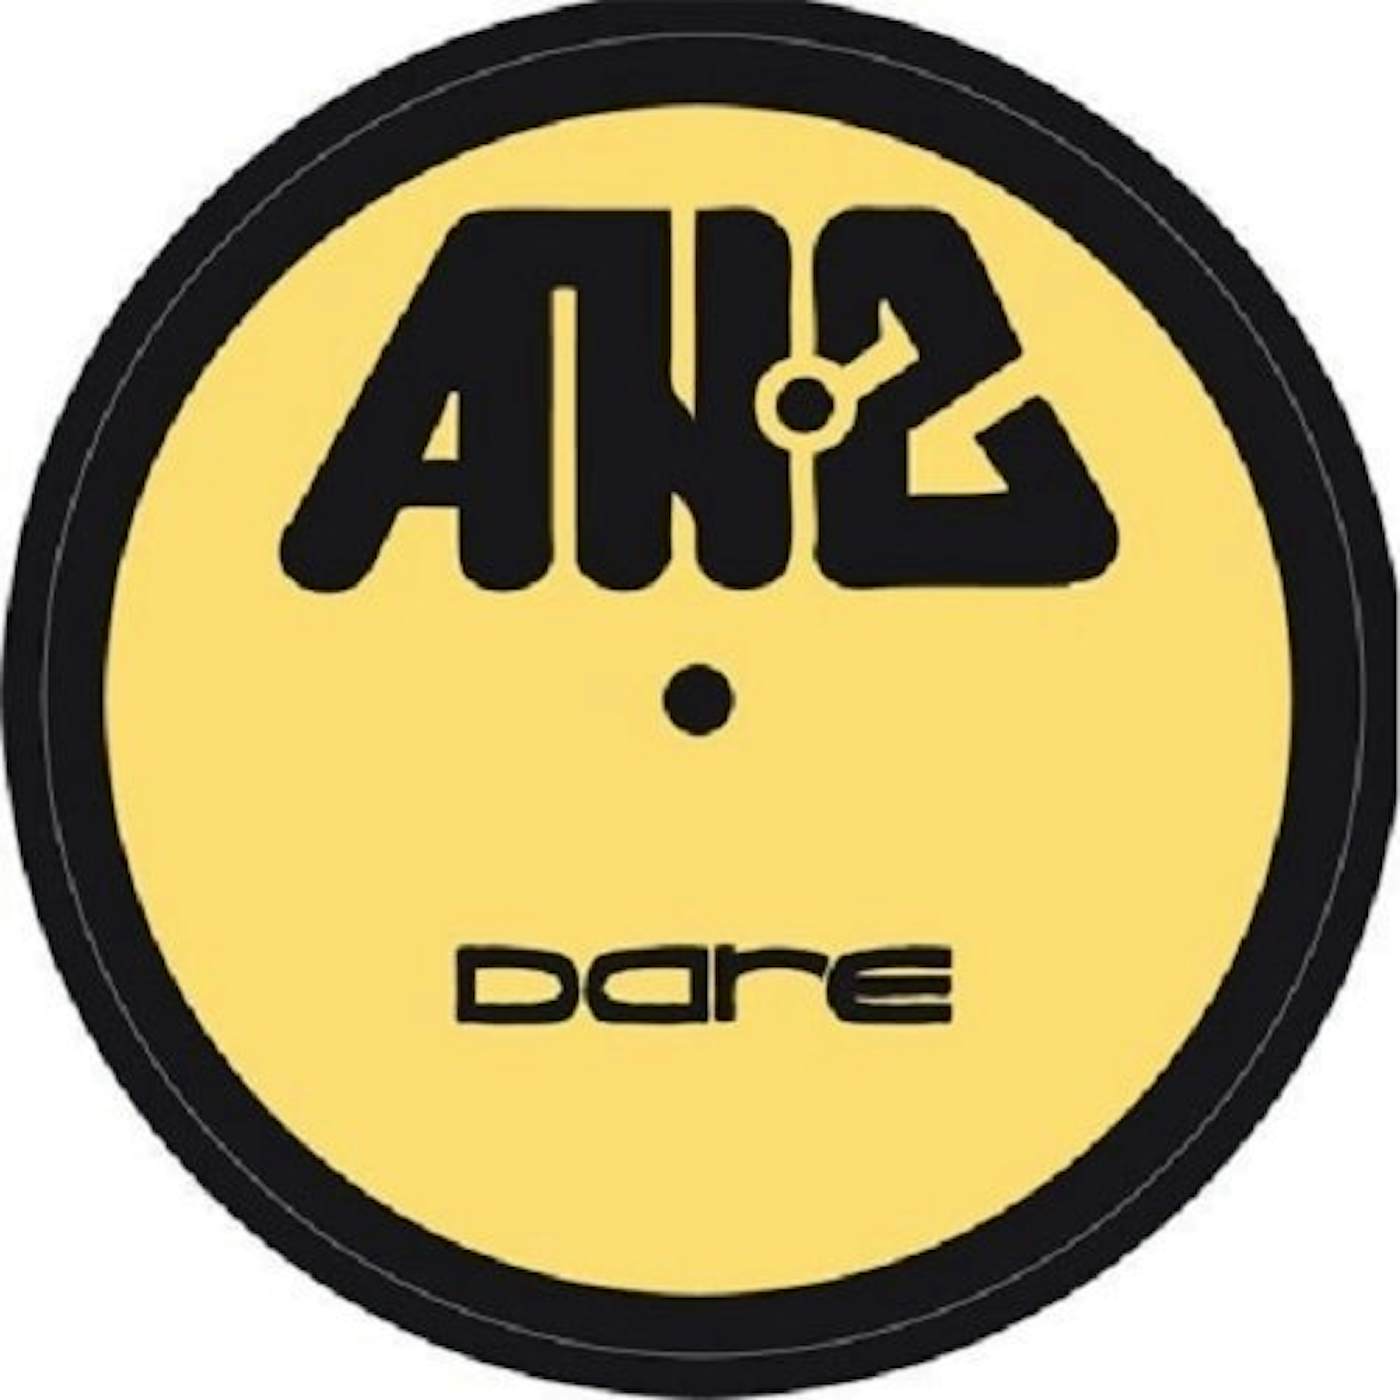 AN-2 Dare Vinyl Record